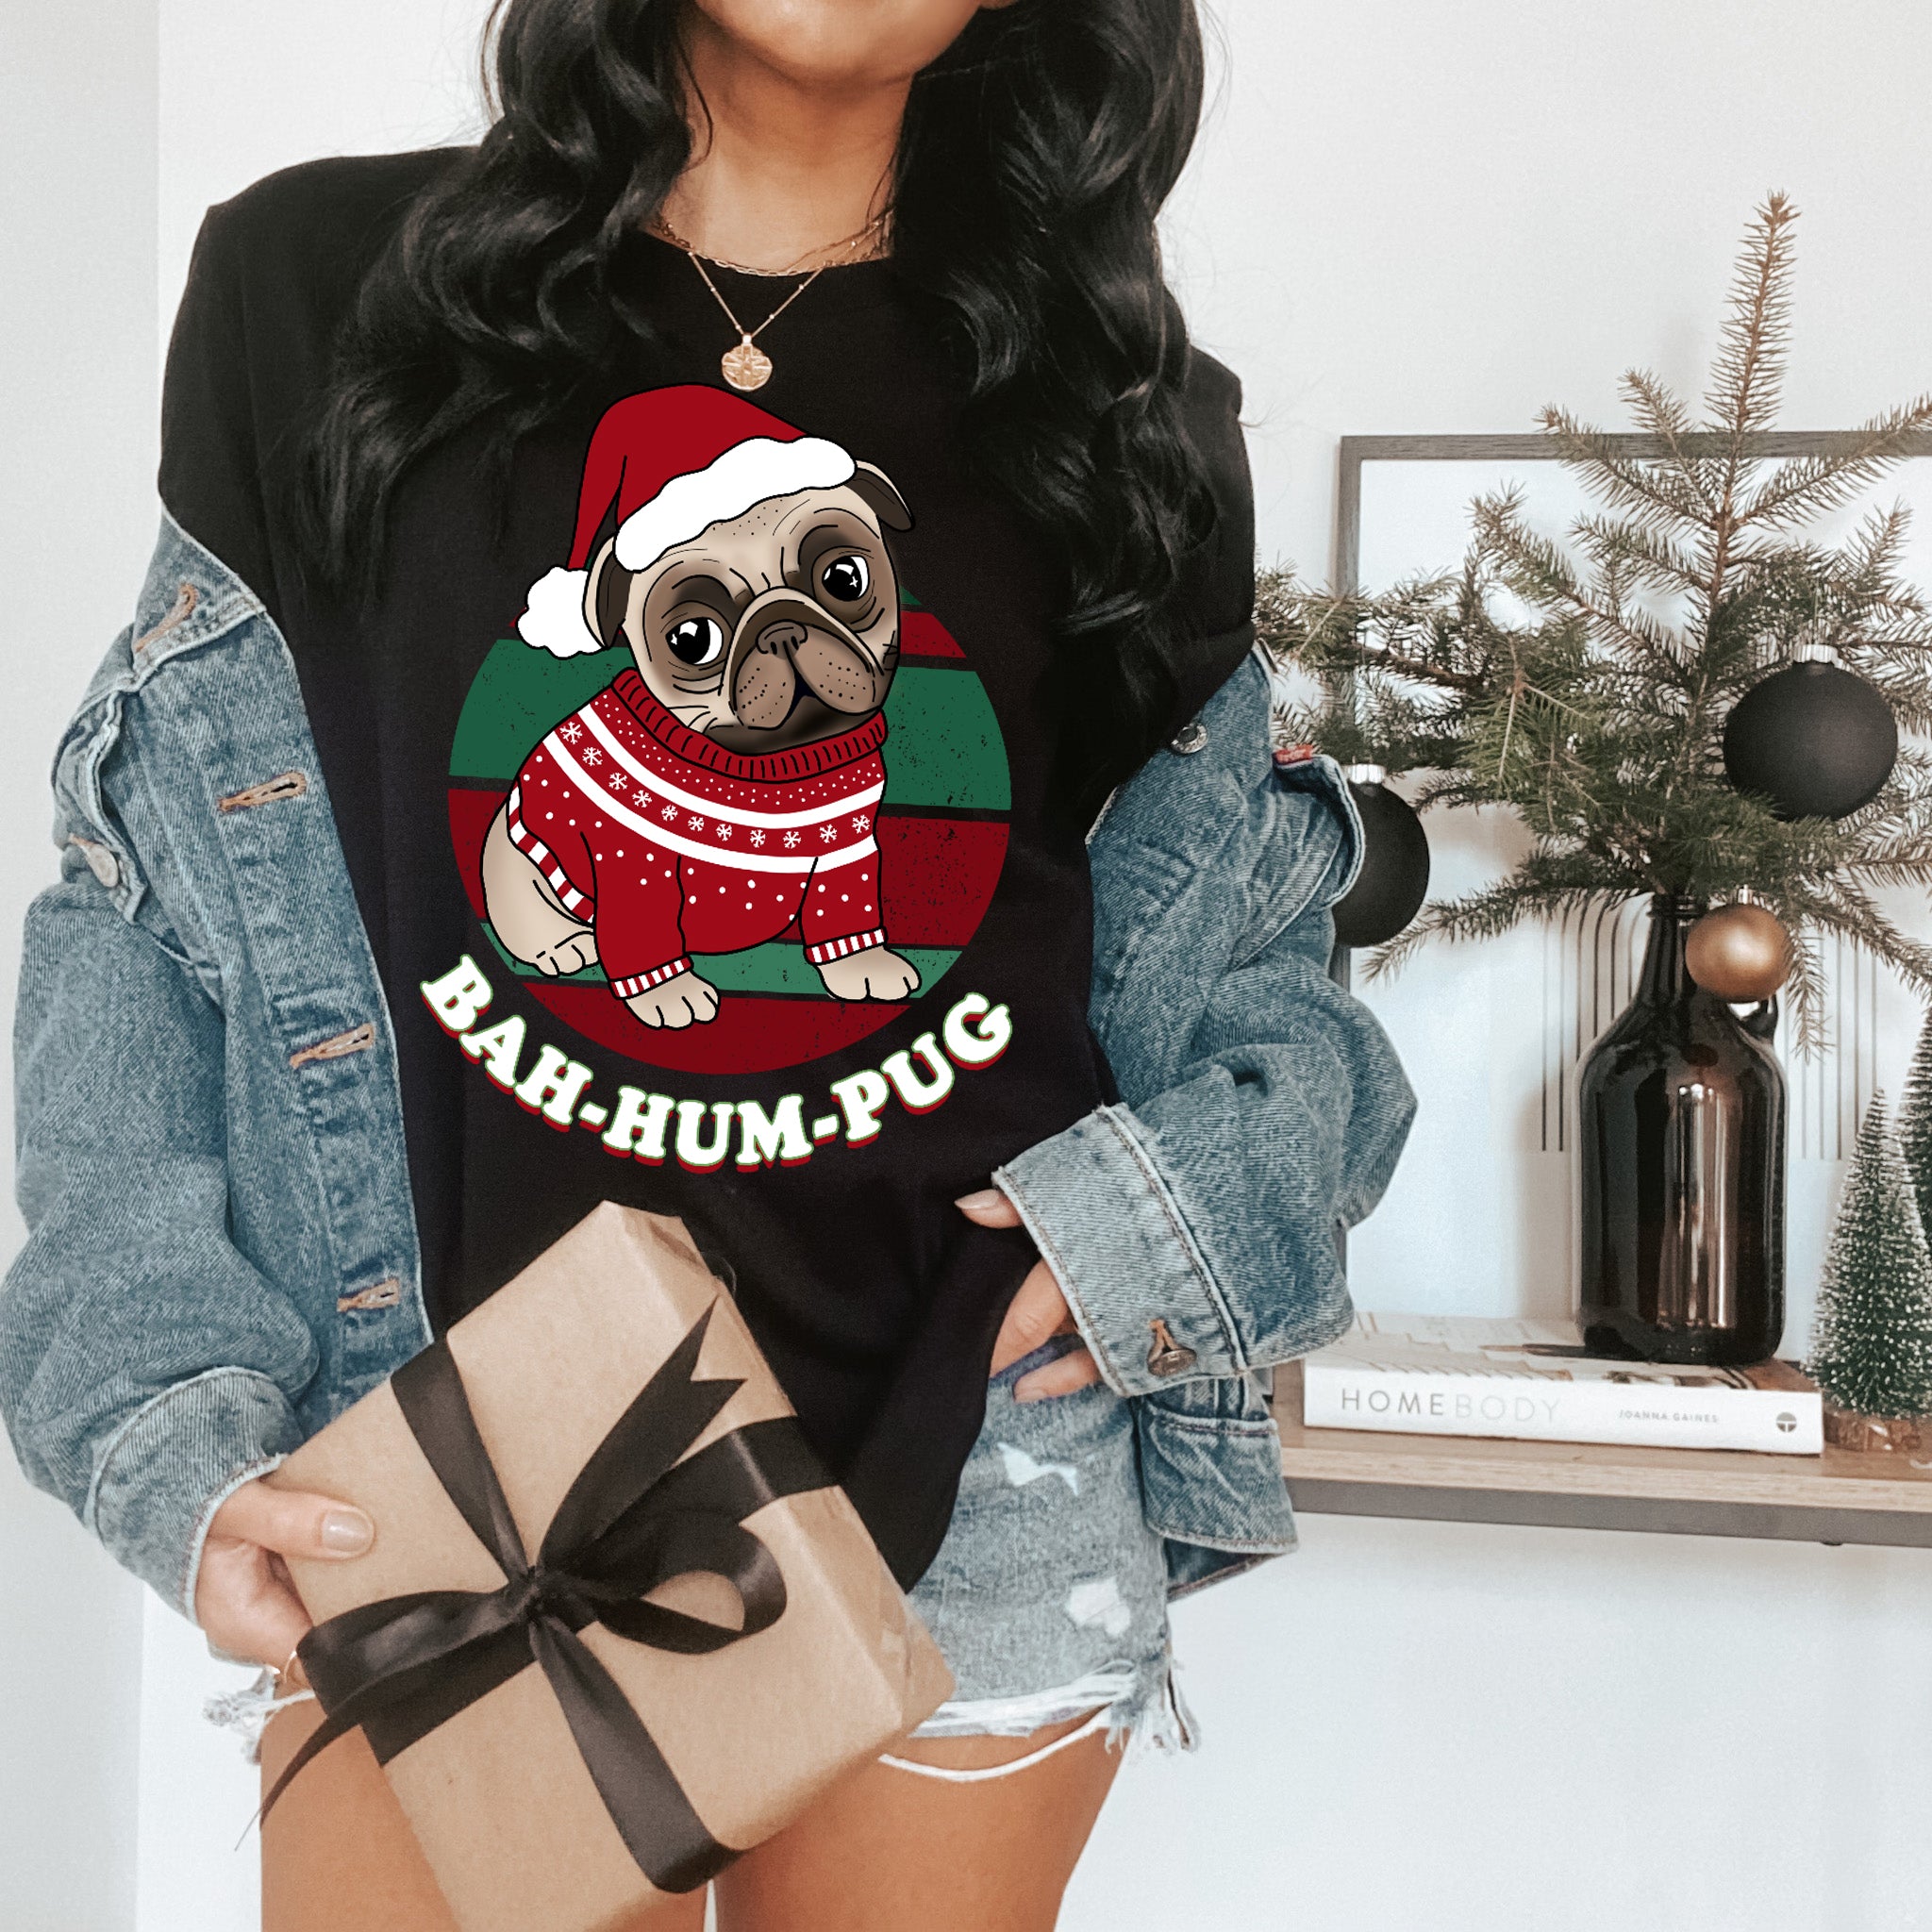 french bulldog christmas shirt that says bah hum pug - HighCiti